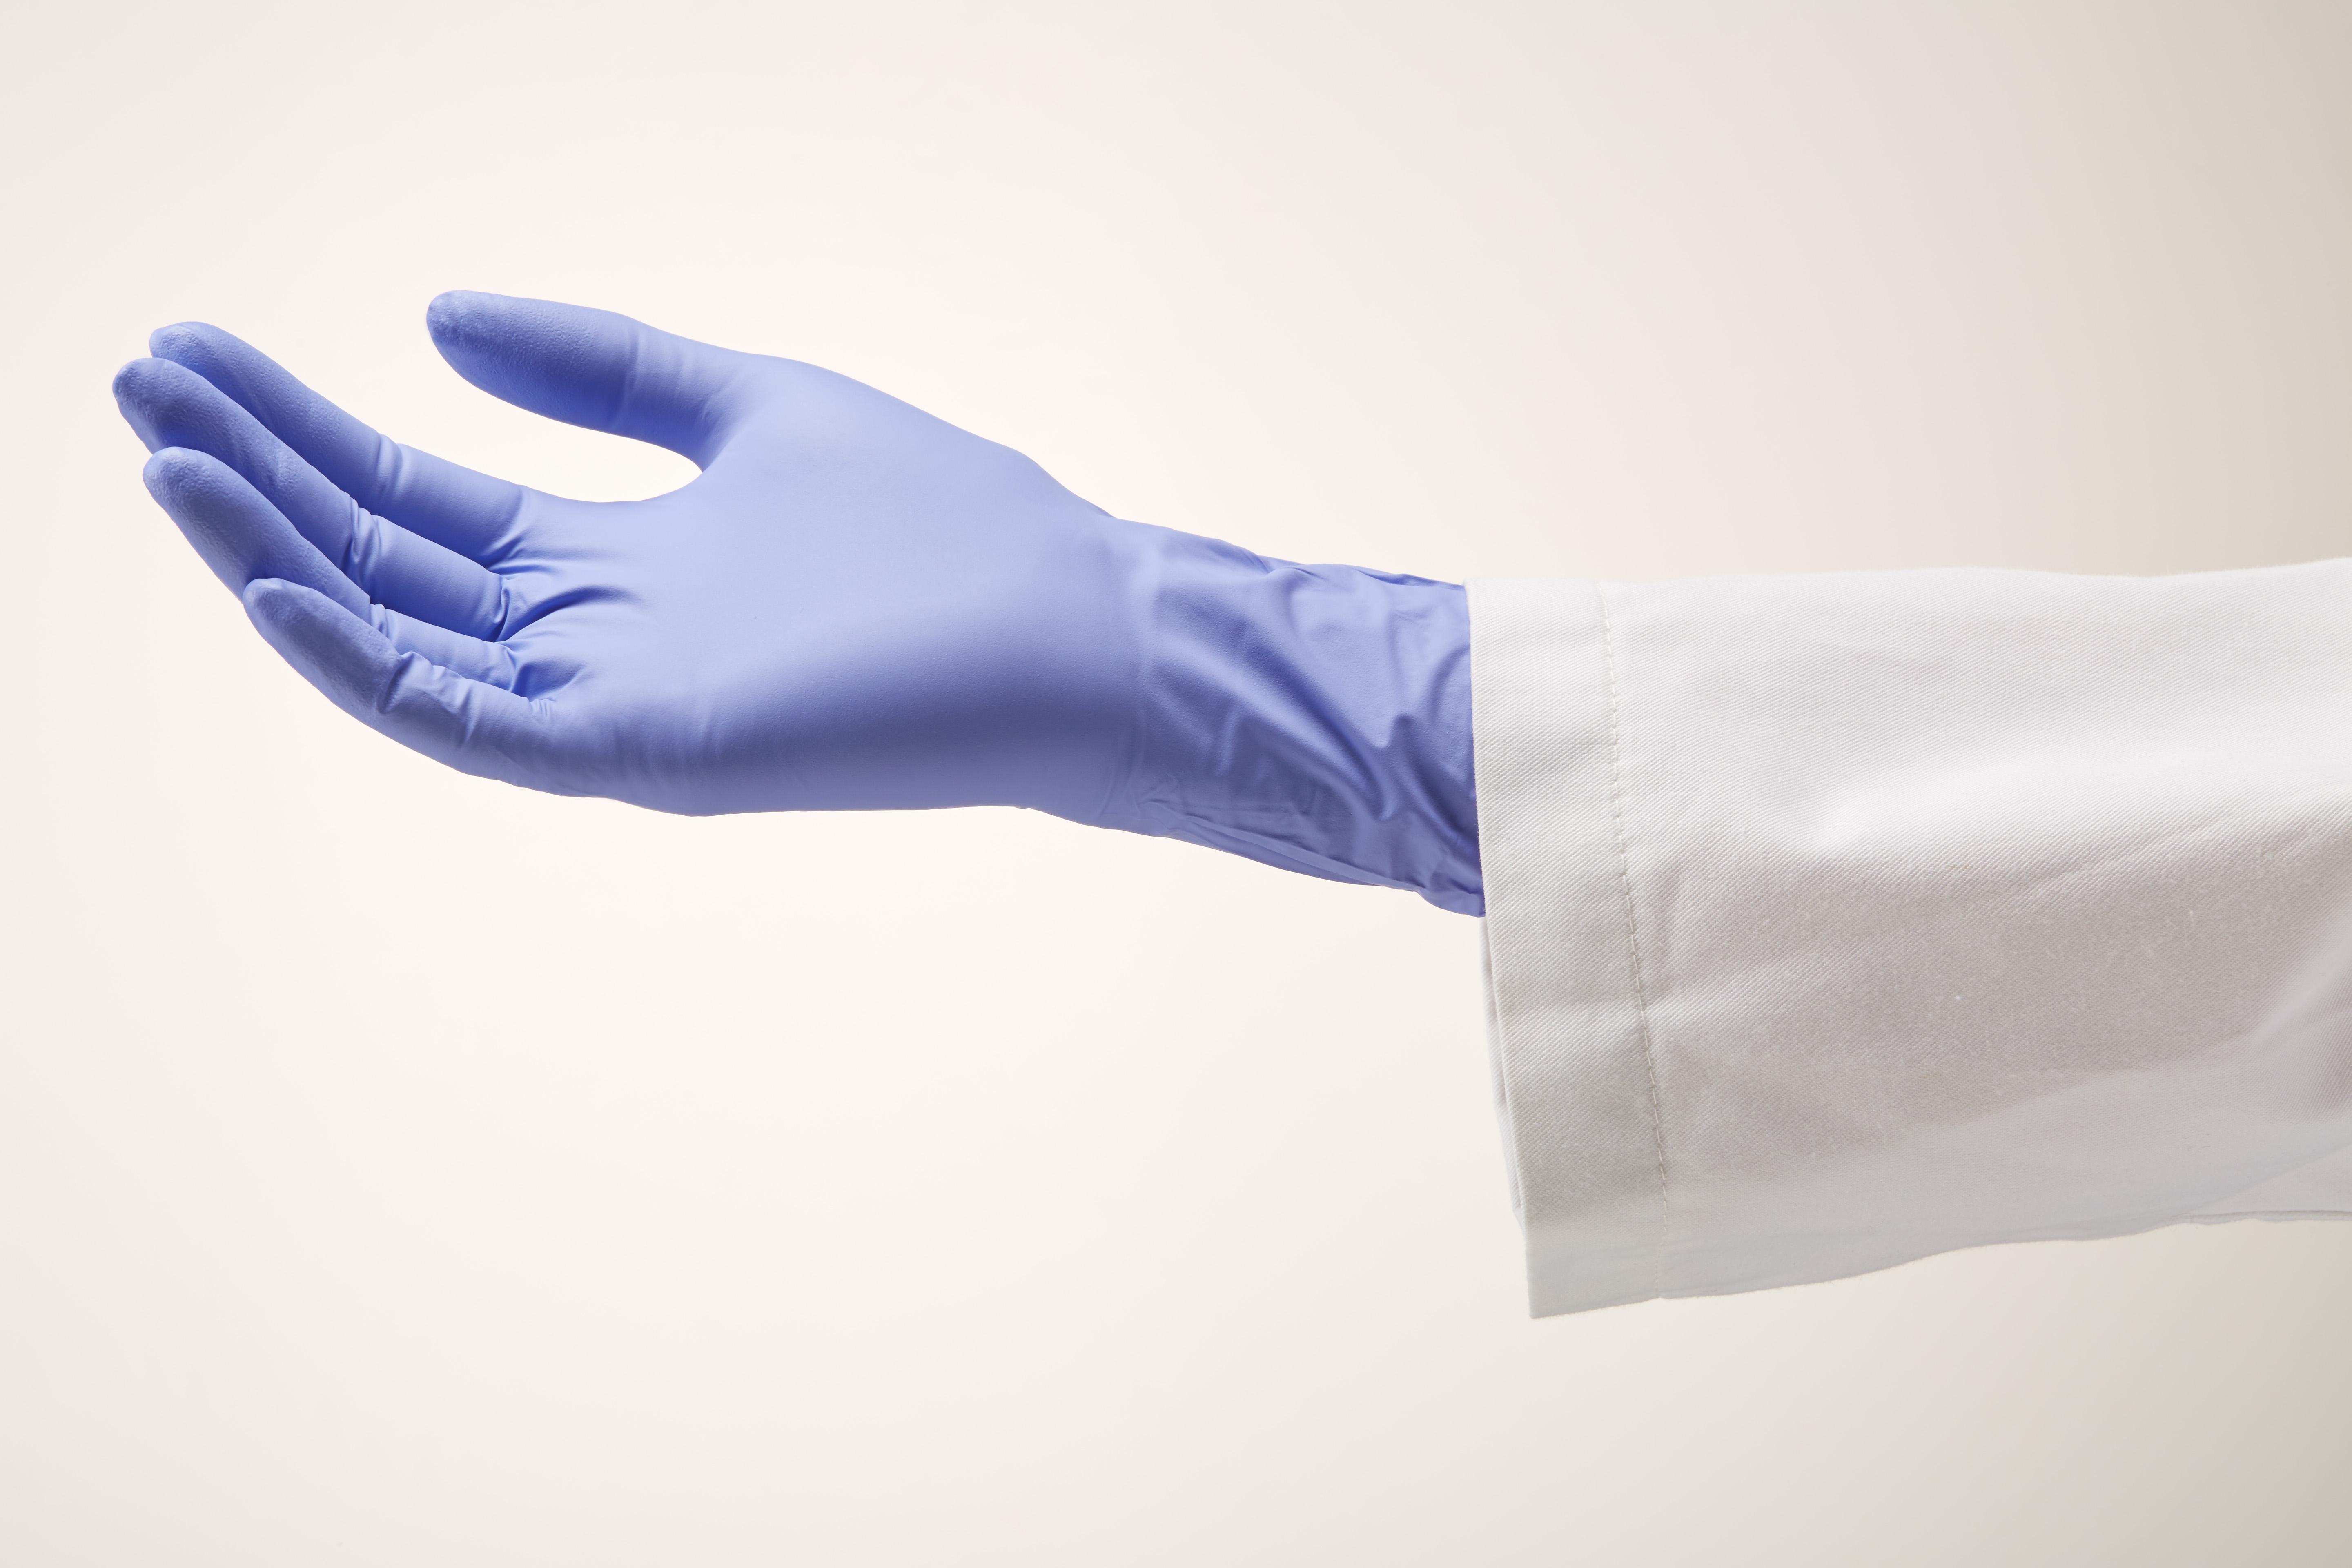 StarGuard PROTECT Nitrile Gloves, Powder Free, Violet-Blue, Size M, Pk/ 10 x 100 gloves.